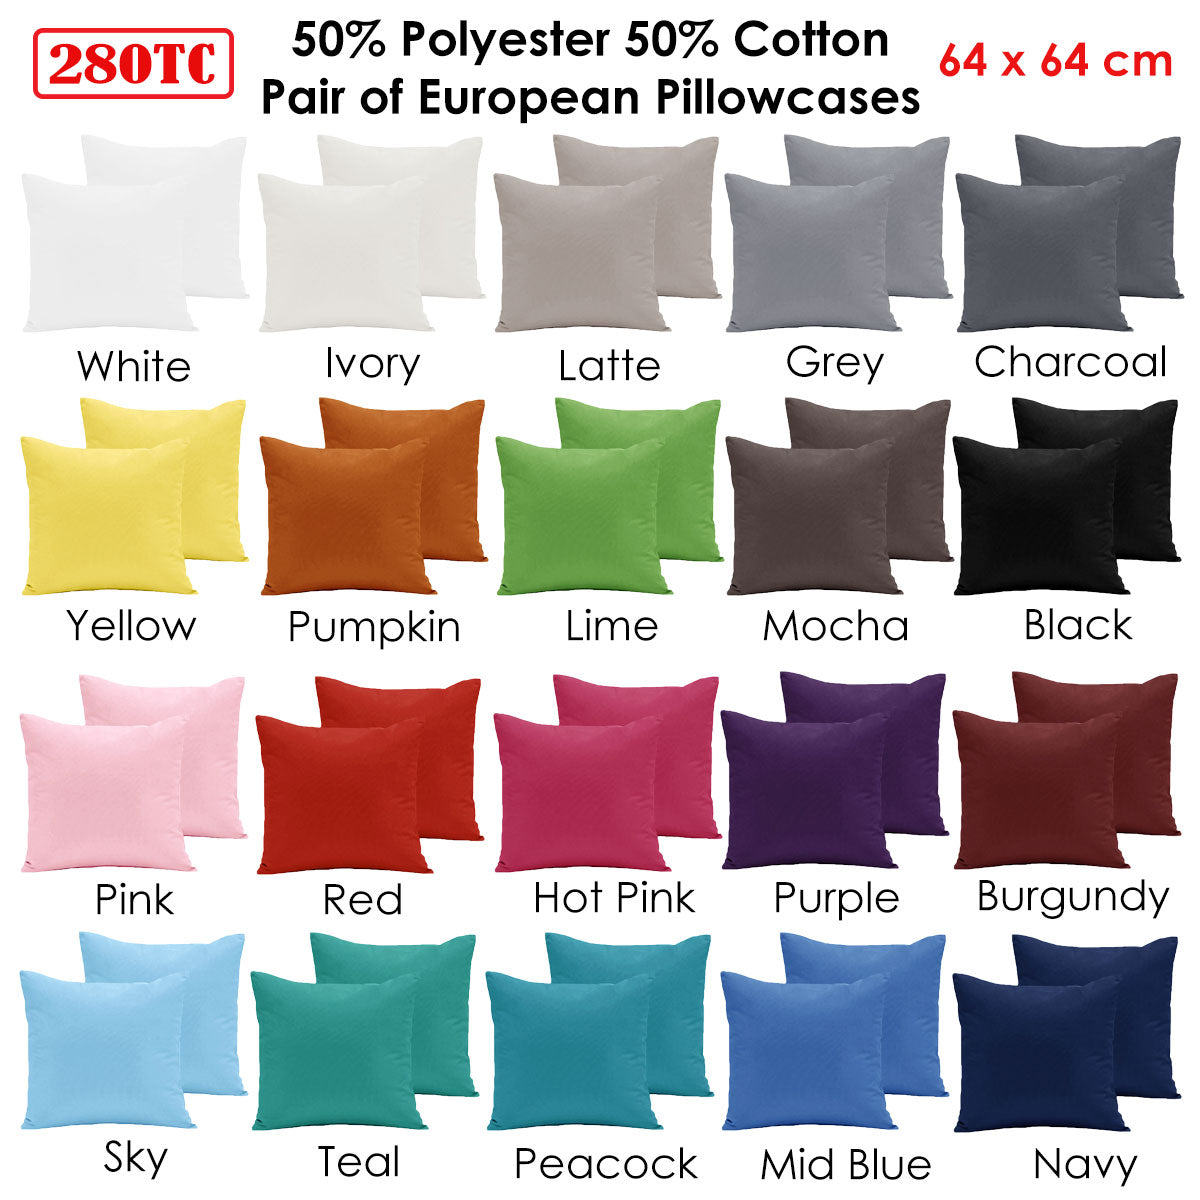 Pair of  280TC Polyester Cotton European Pillowcases Peacock